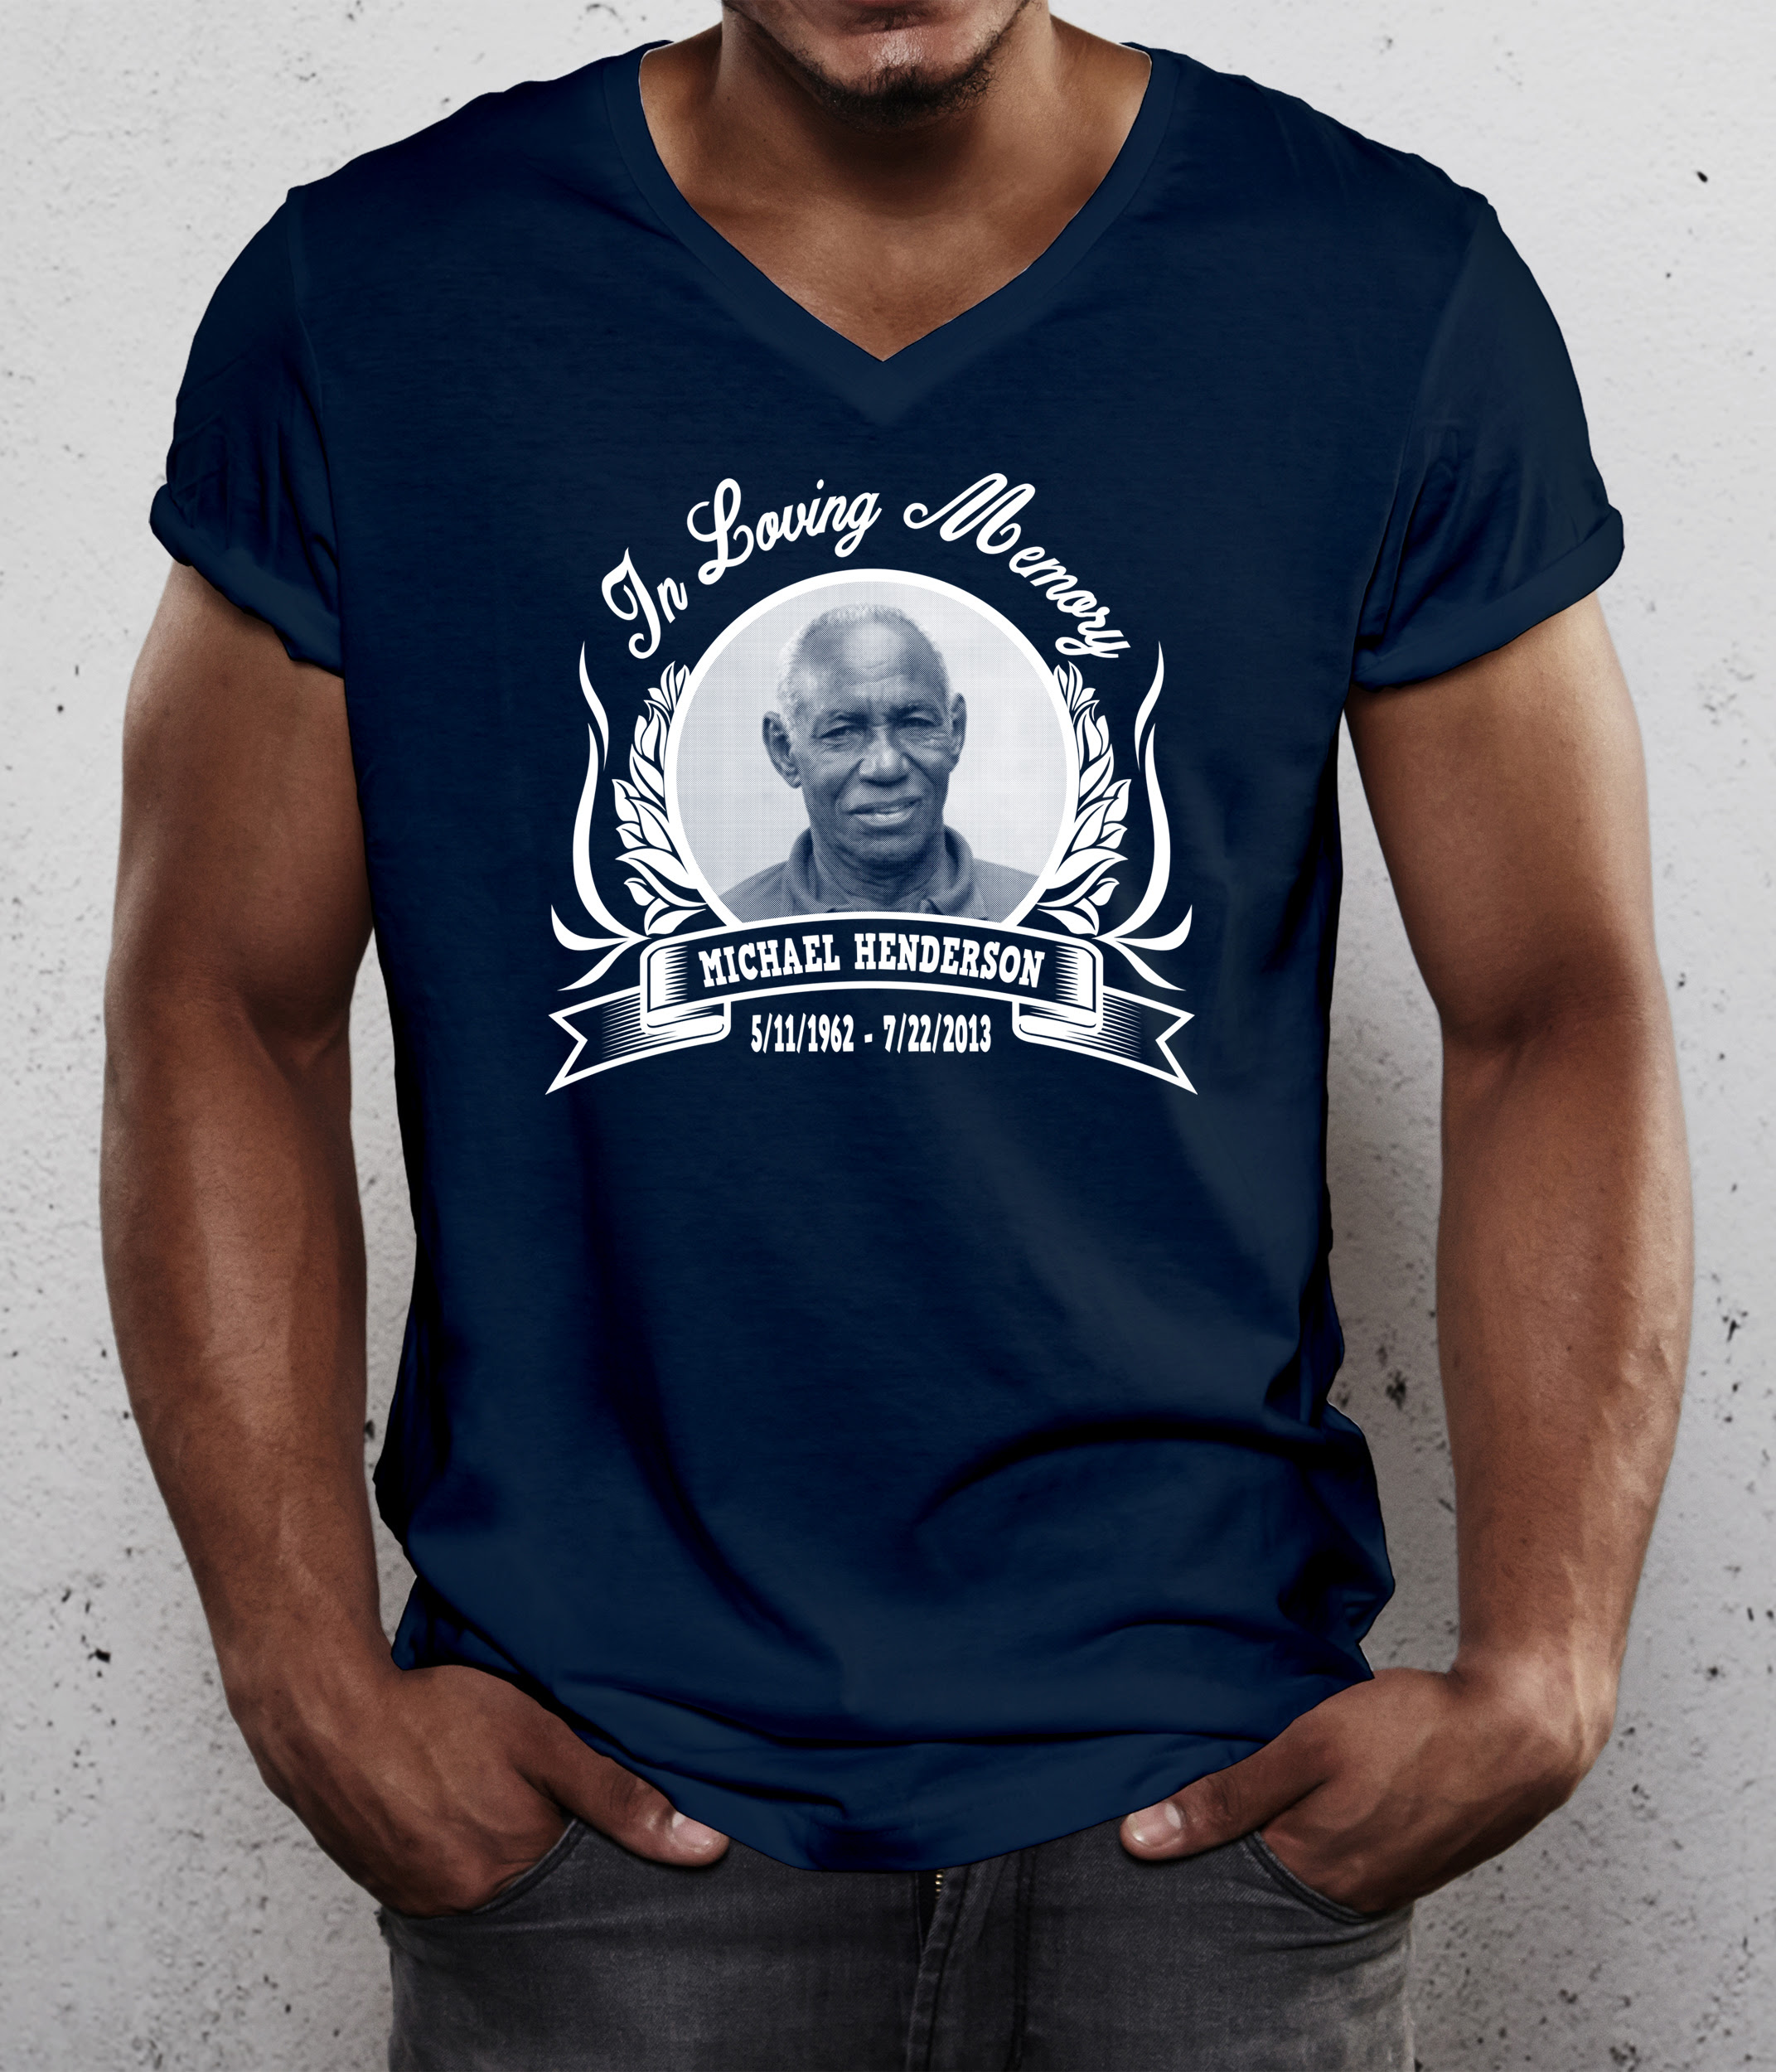 in-loving-memory-shirt-design